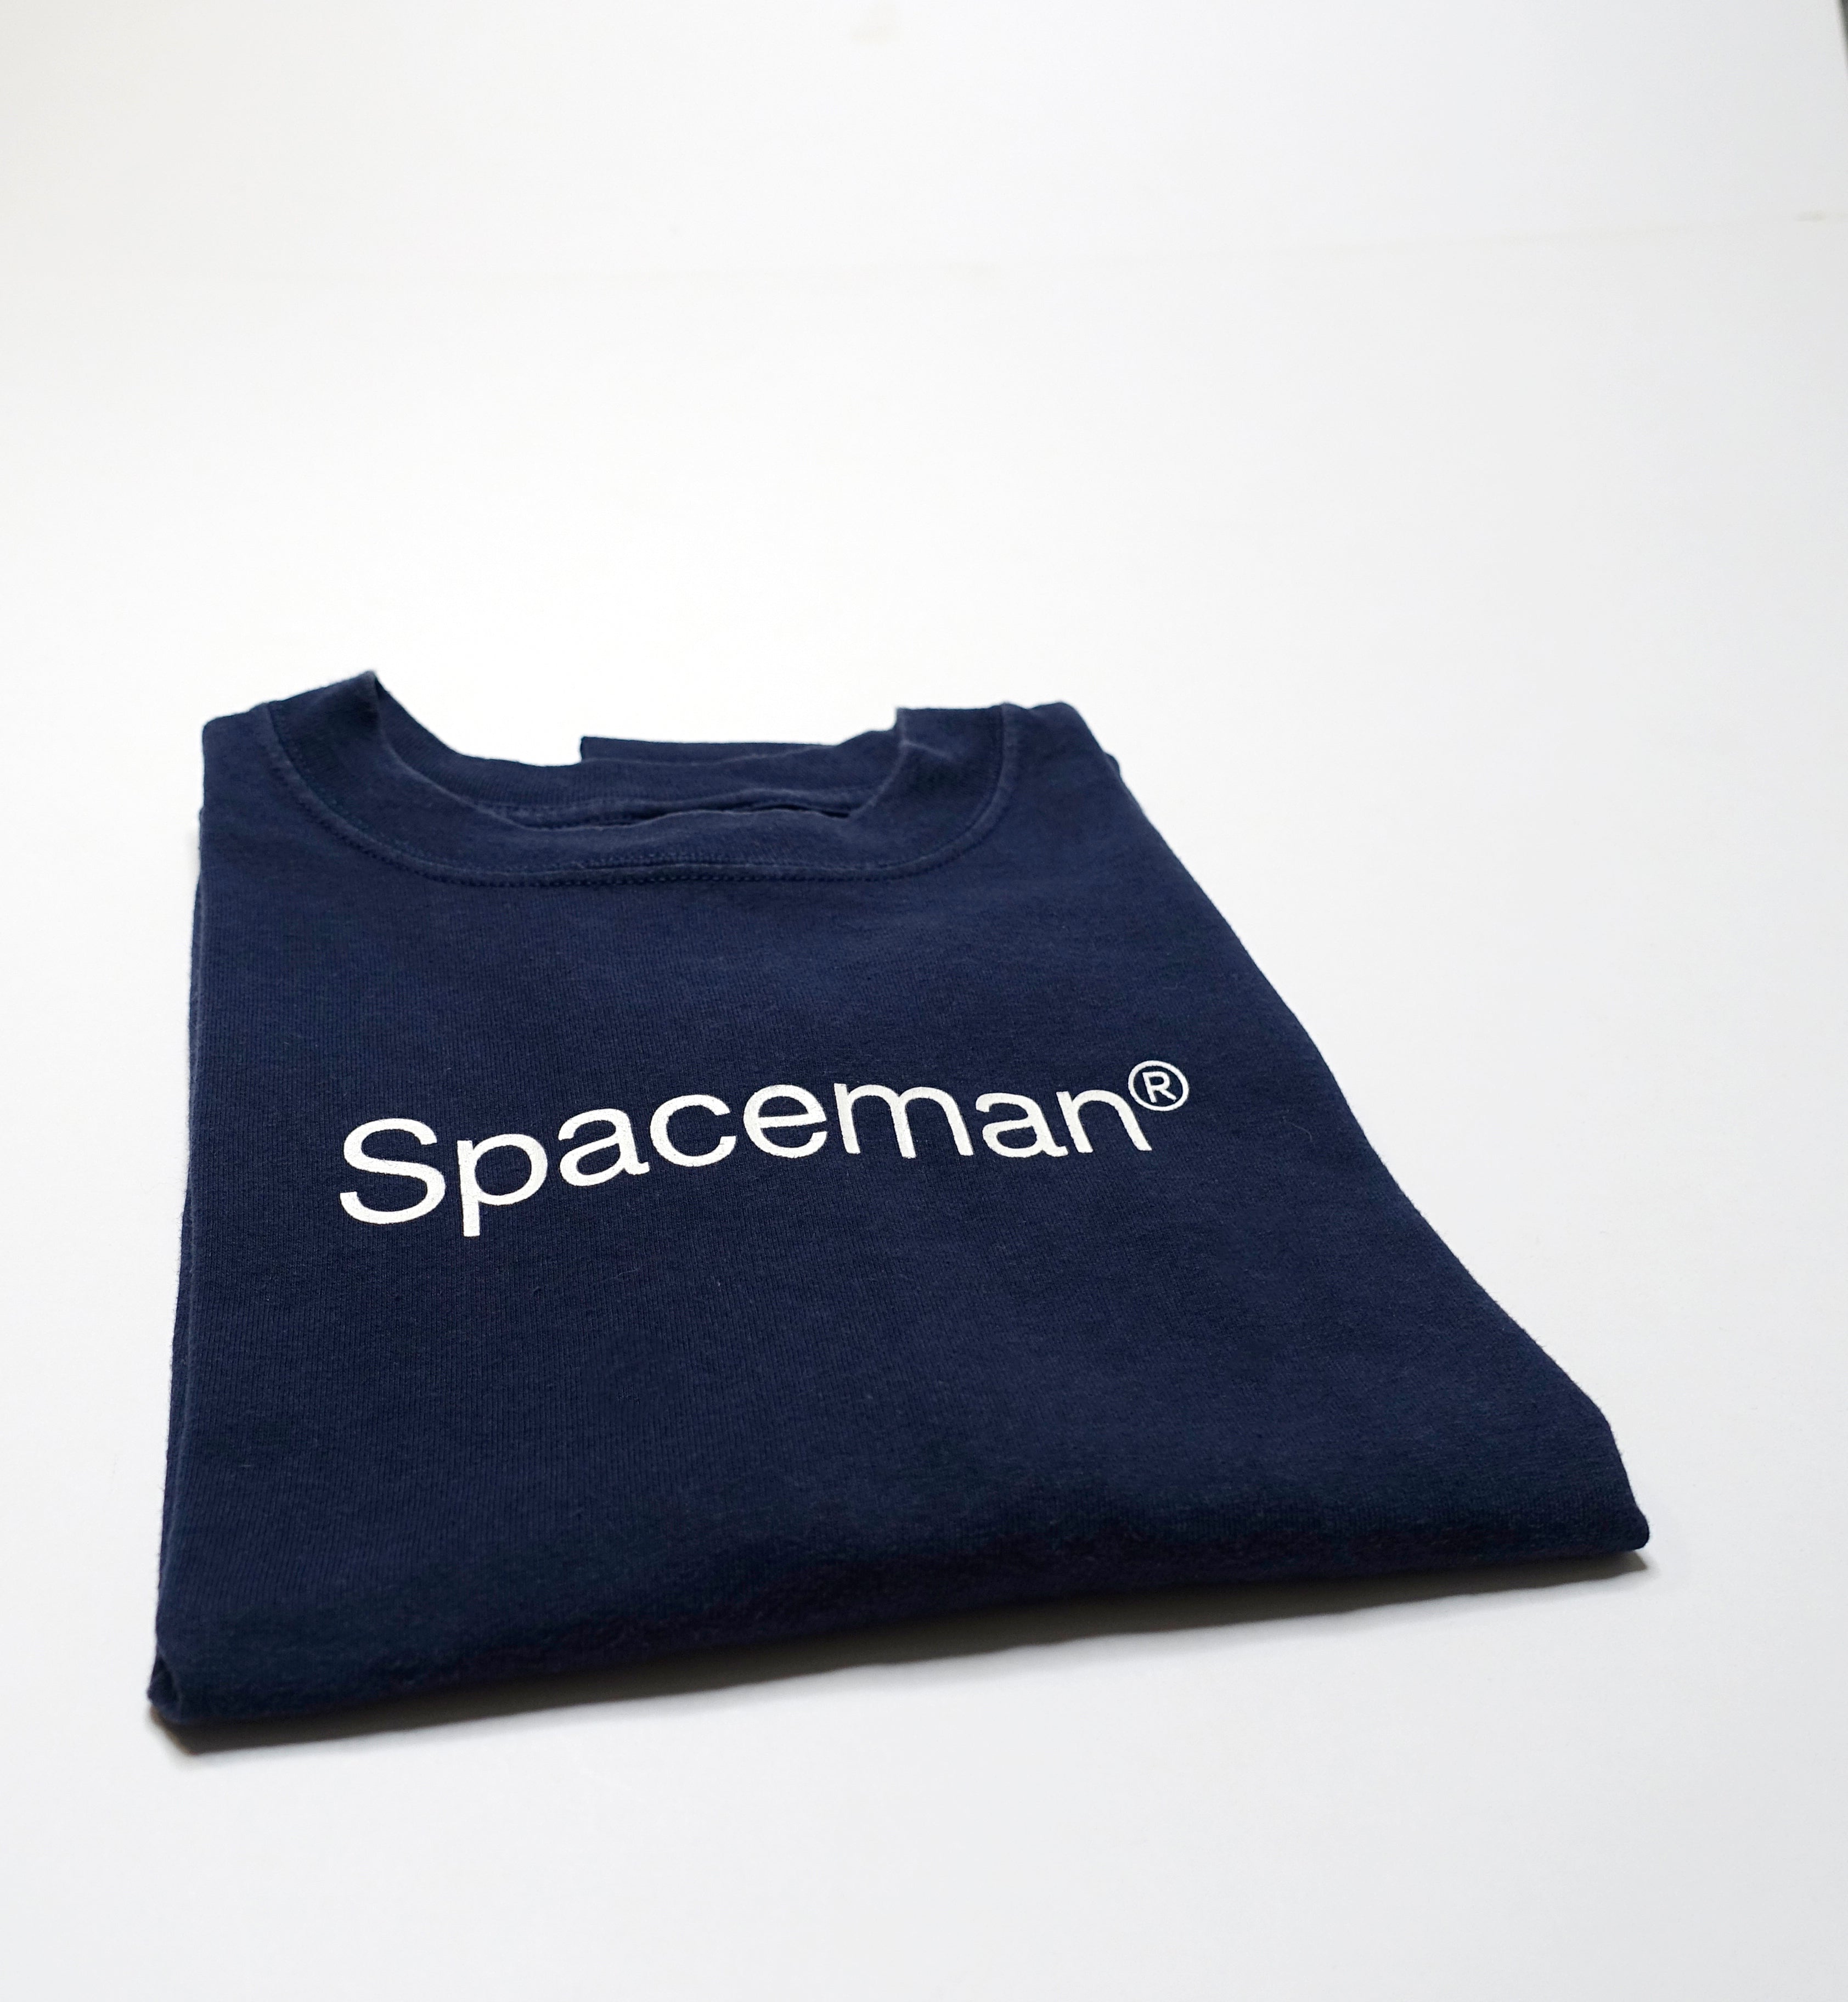 Spiritualized® - Spaceman® 90's Tour Shirt Size Large